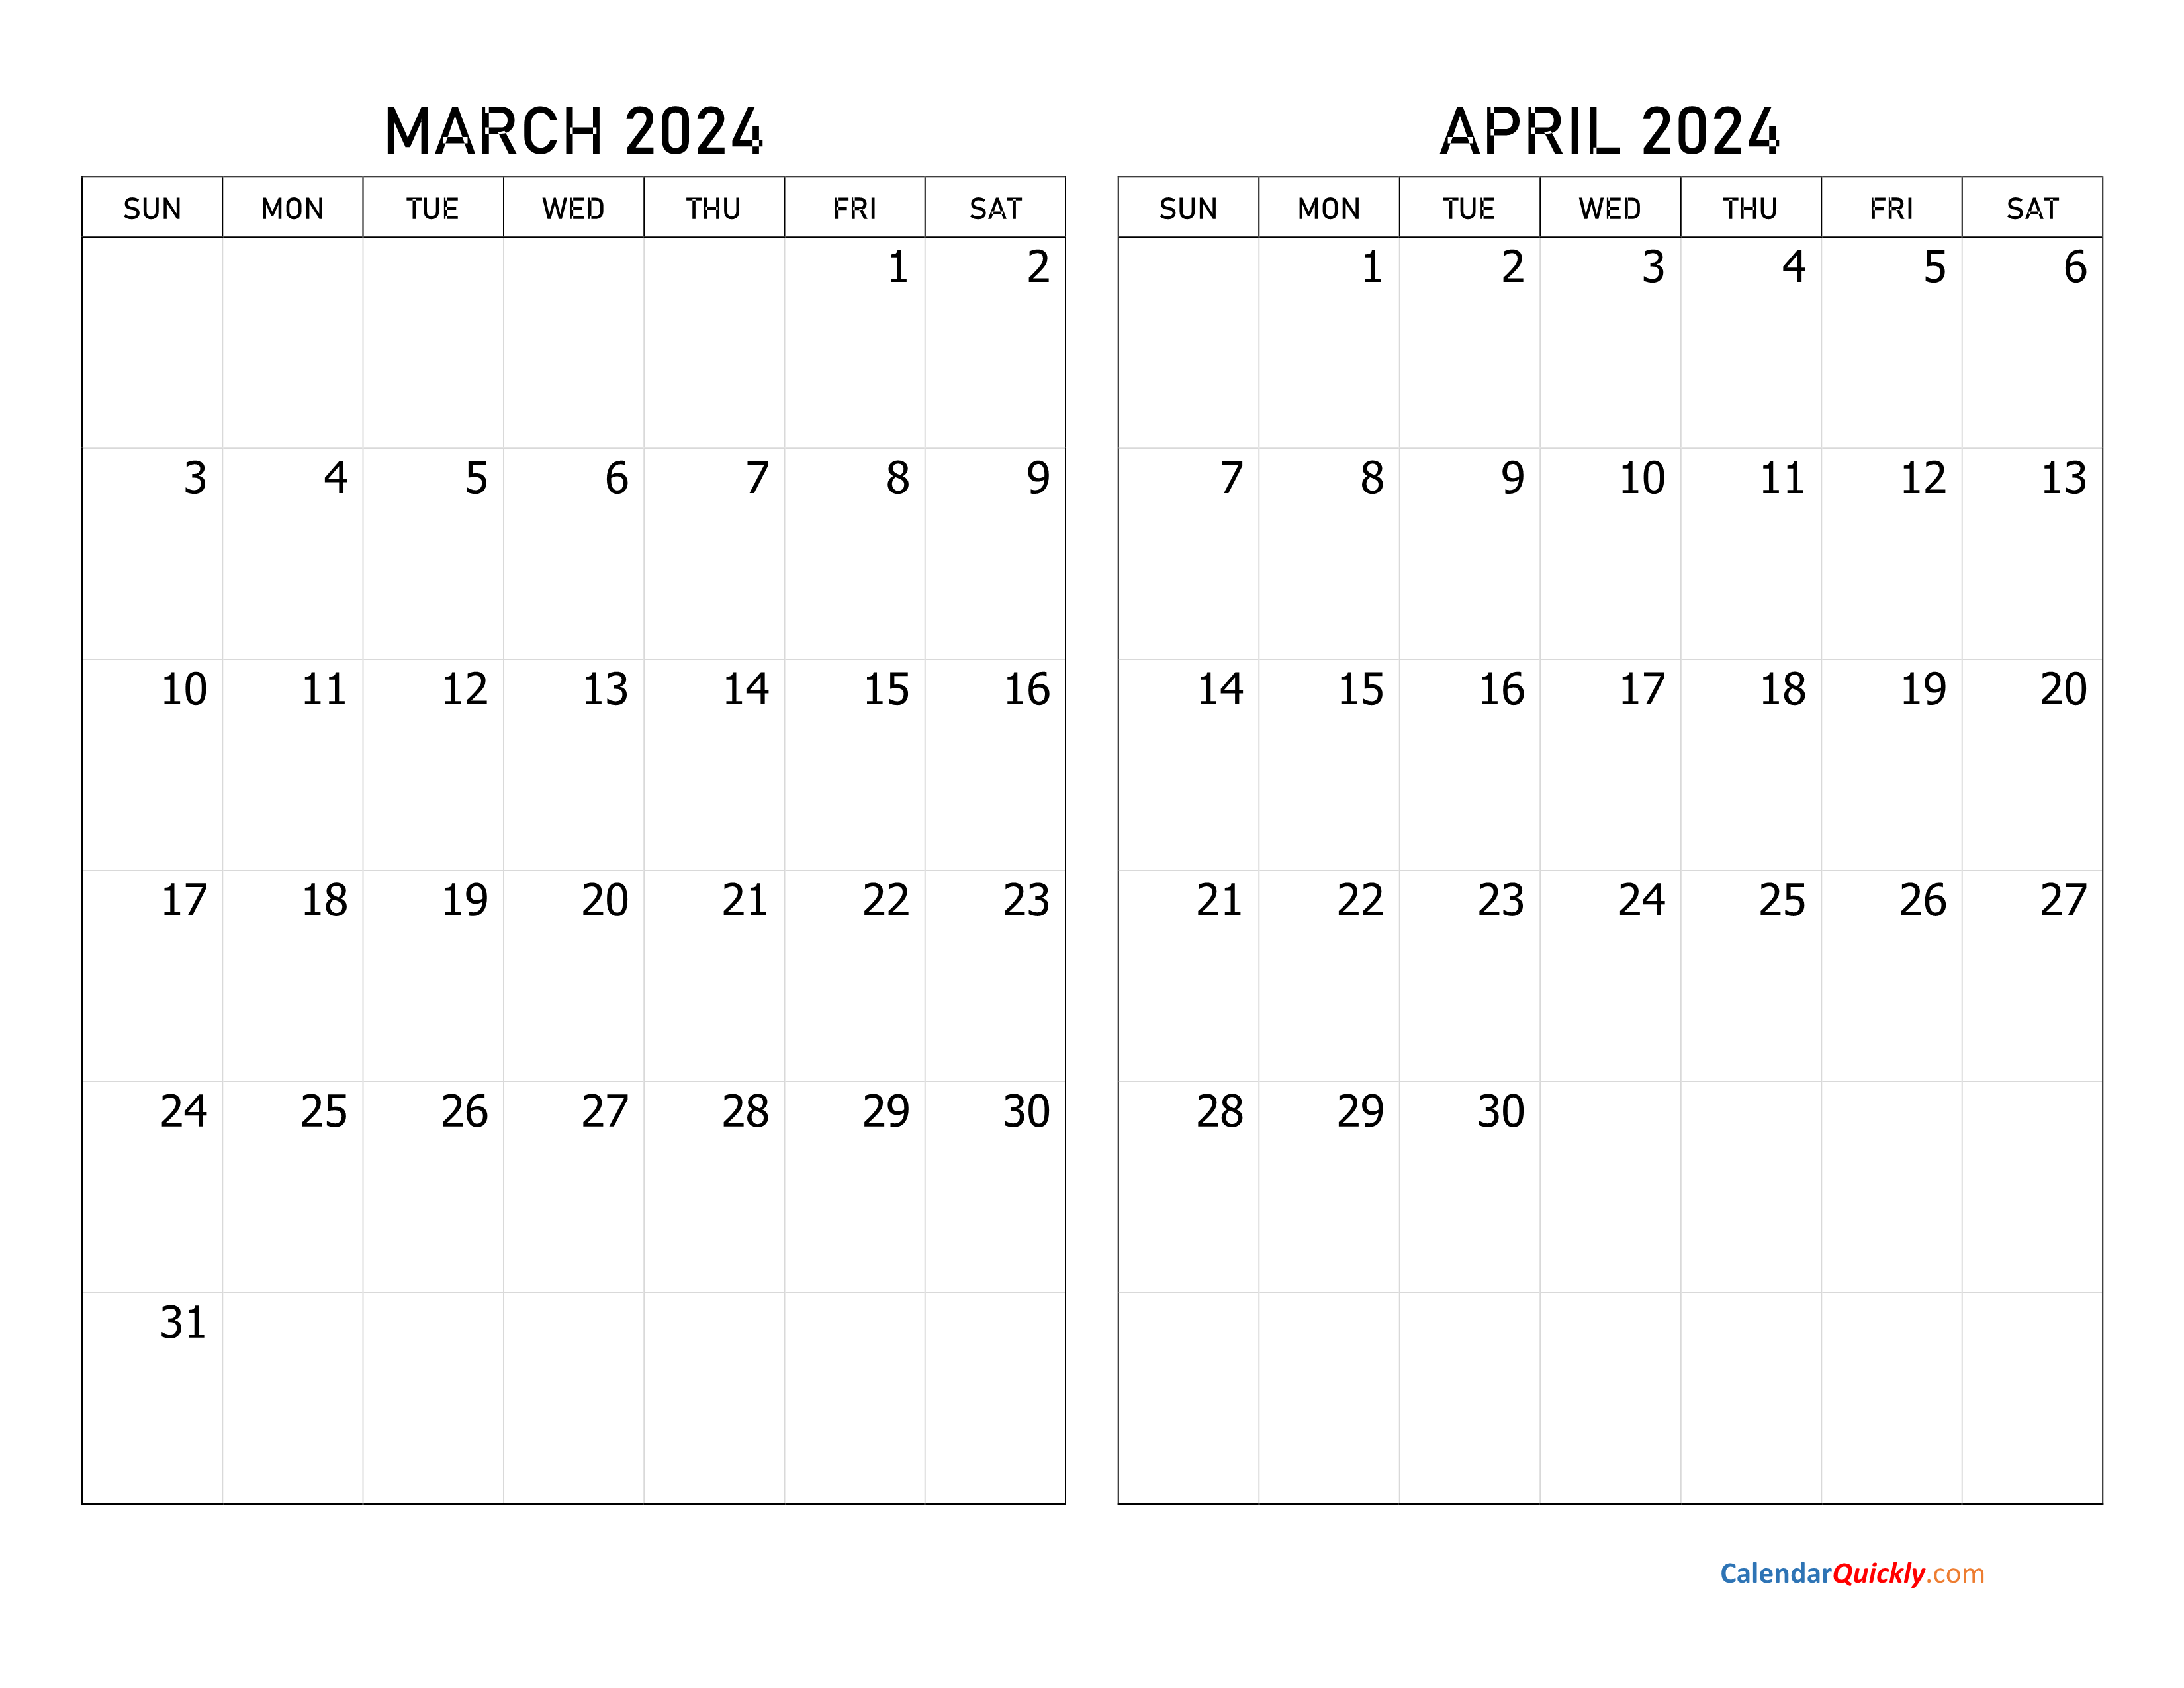 March And April 2024 Calendar | Calendar Quickly for Calendar 2024 March April May June